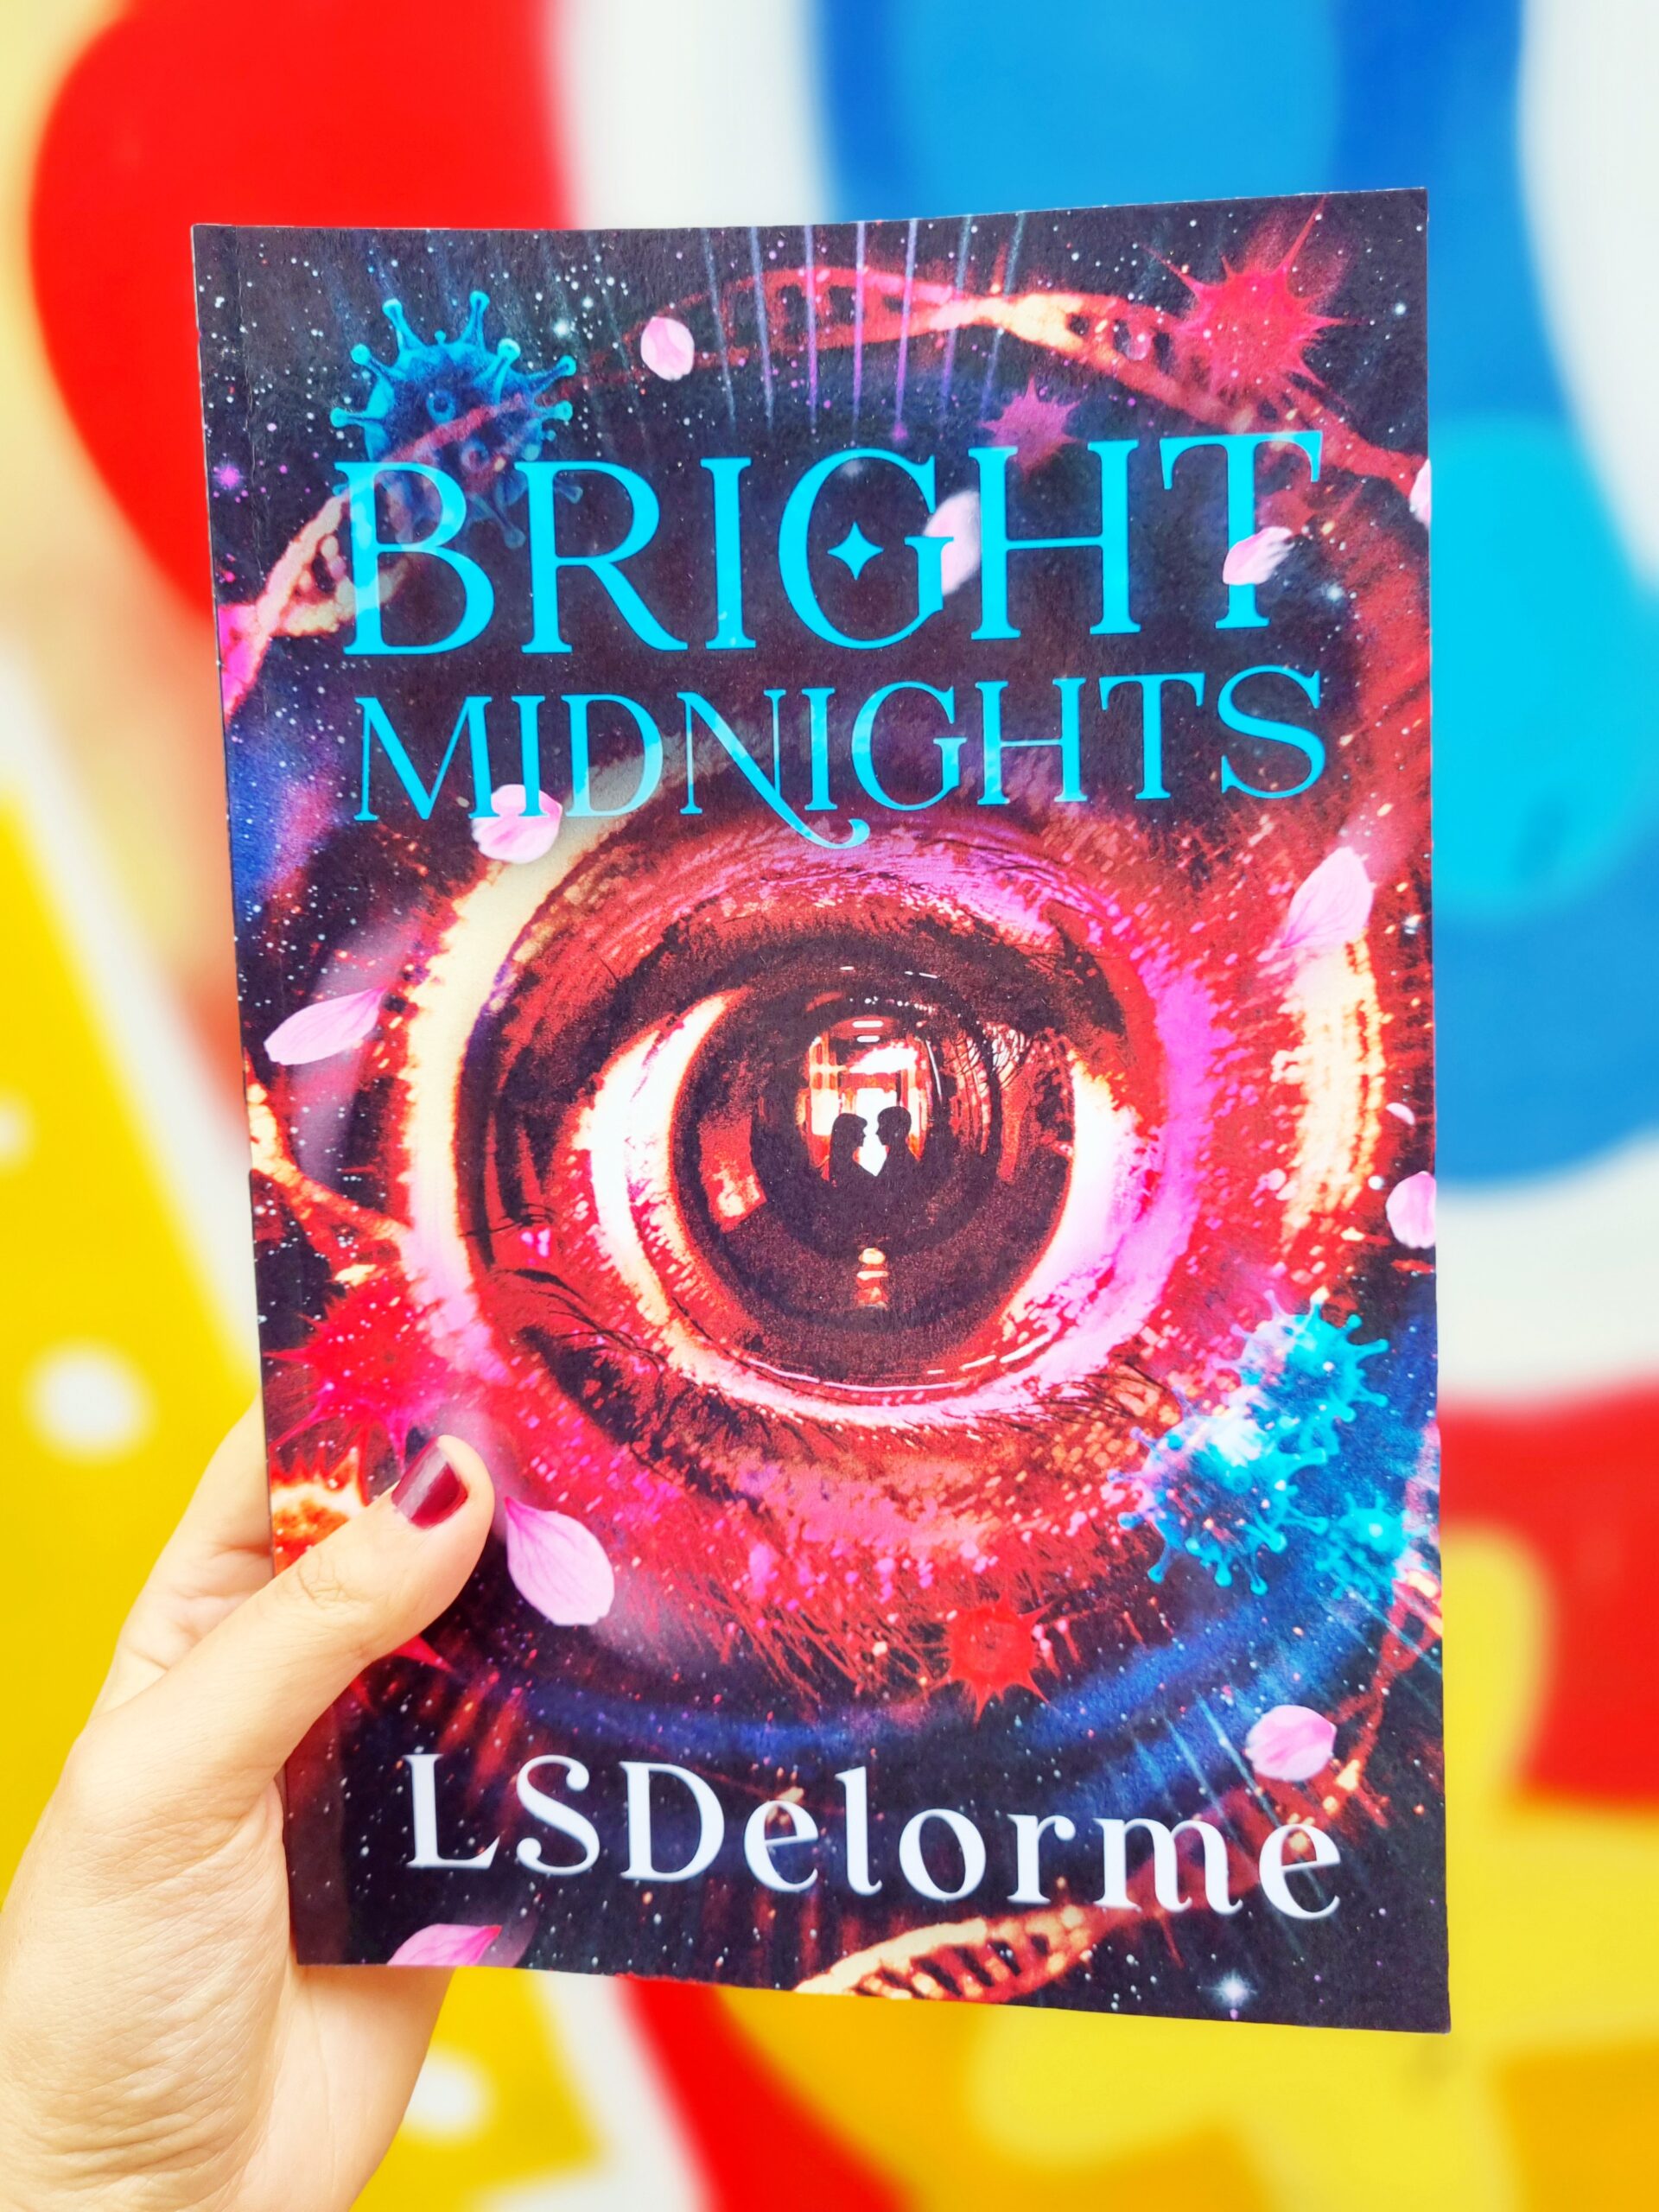 <img src="bright midnights.jpg" alt="bright midnights books you should read"/>